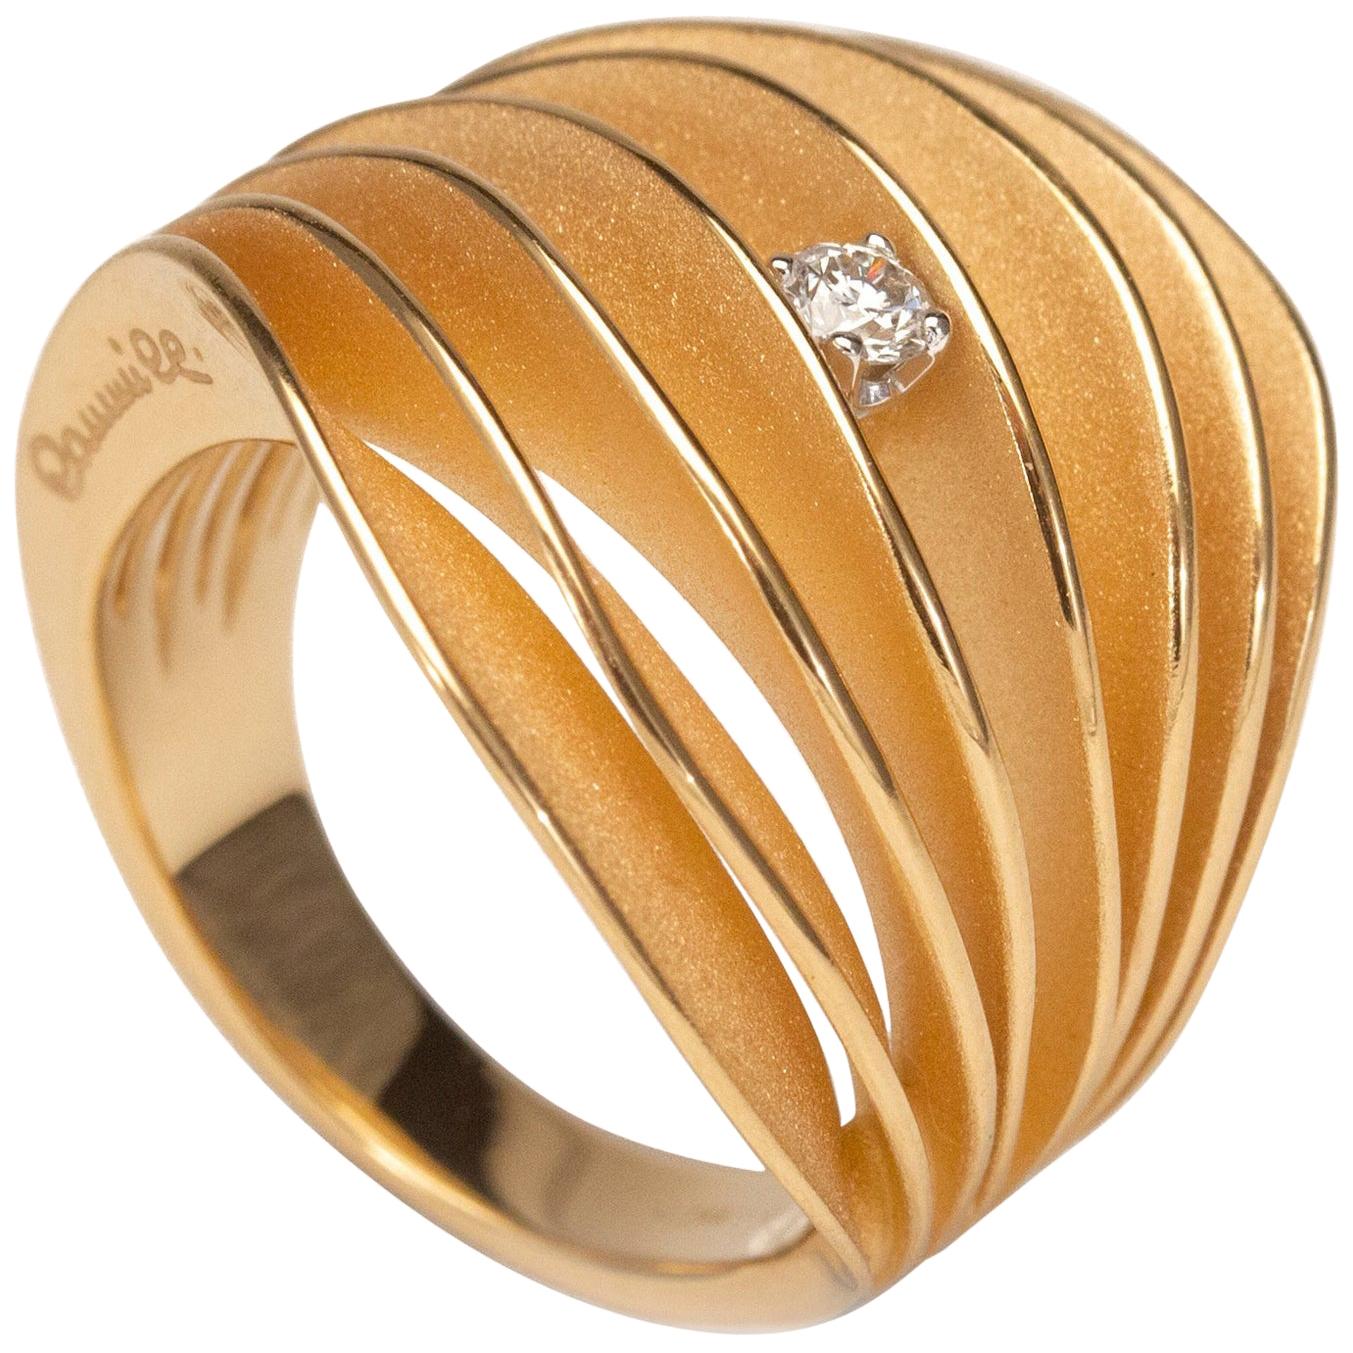 For Sale:  Annamaria Cammilli "Dune Velaa" Ring with Diamond in 18 Karat Apricot Gold